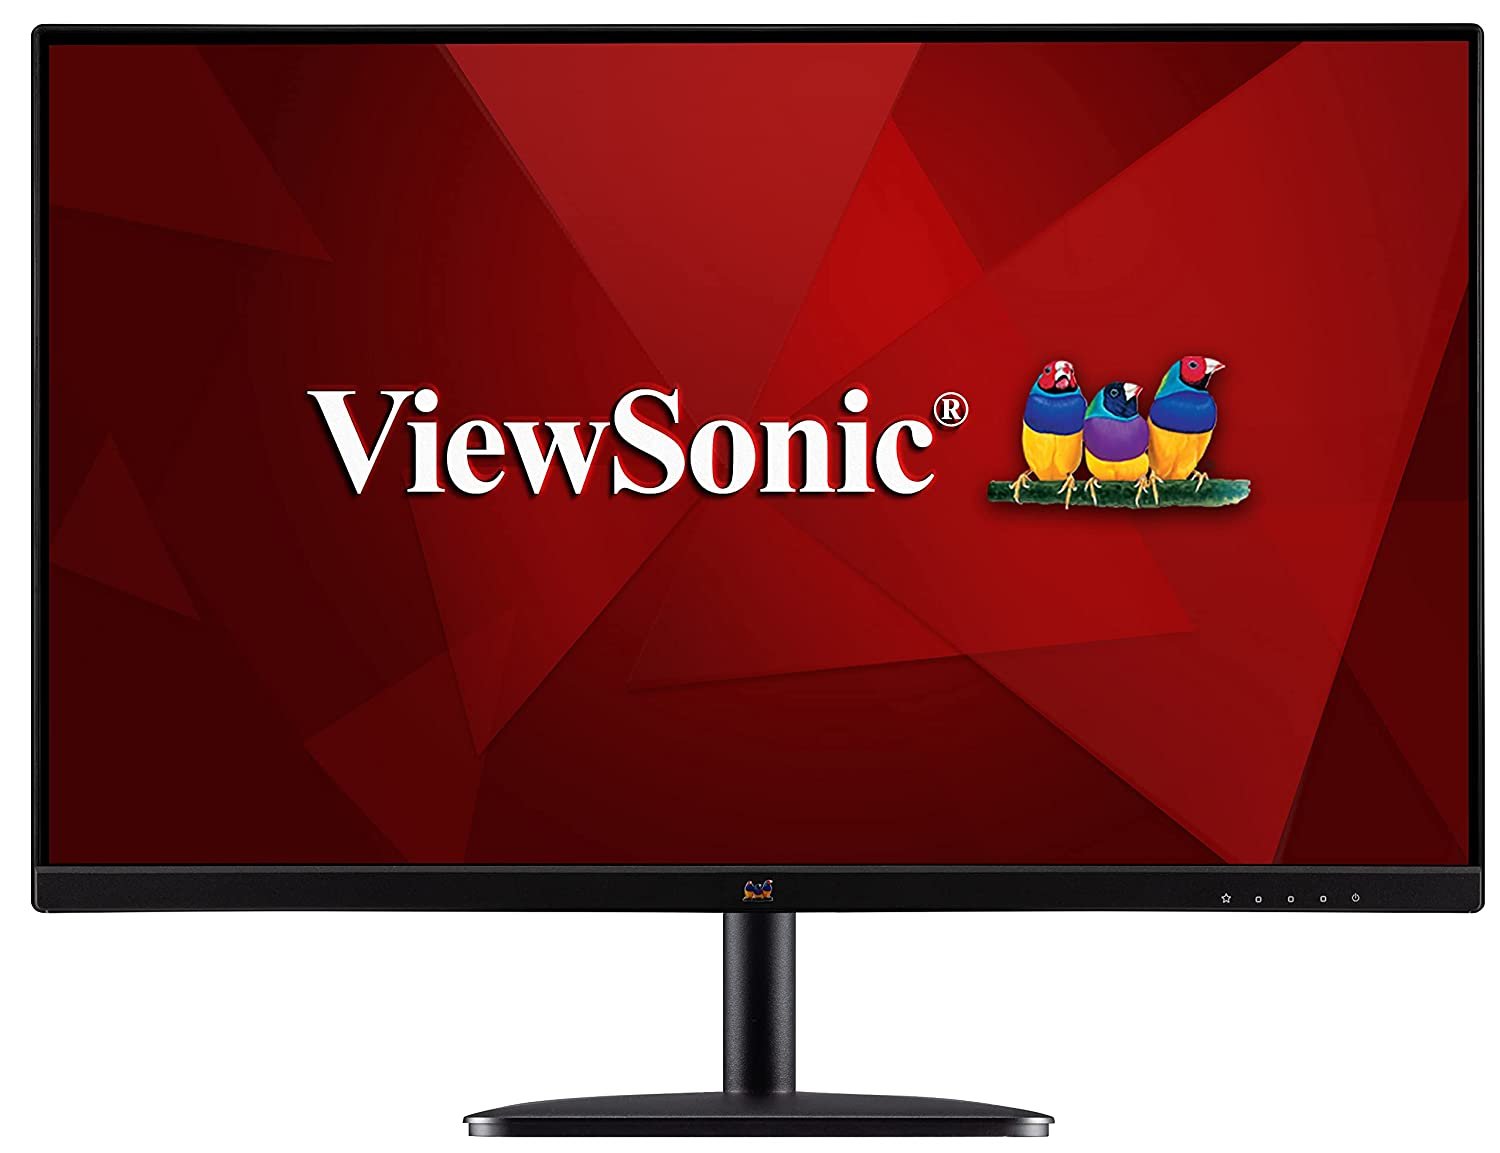 ViewSonic A2432 mh Monitor